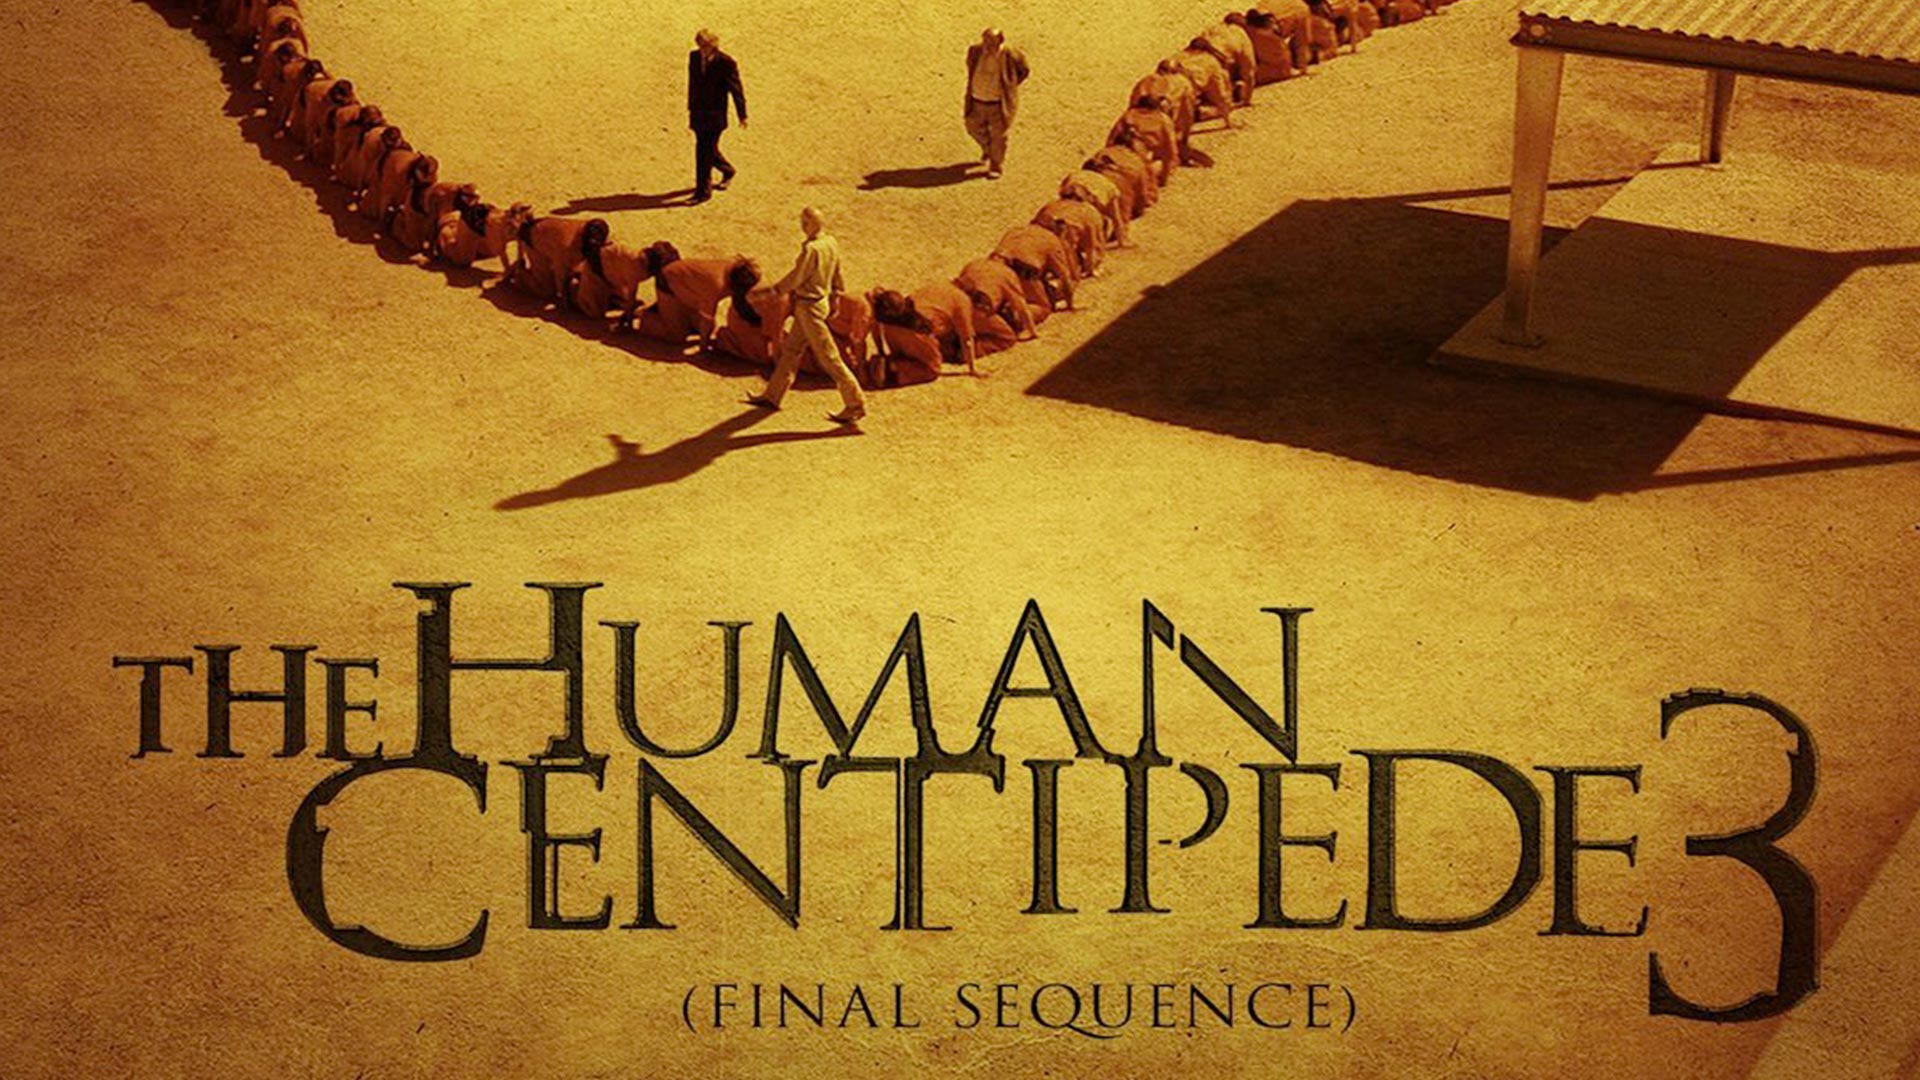 Human Centipede III: Final Sequence, Eric Roberts, Dieter Laser, Laurence R. Harvey, Tom Six, Tom Six, Ilona Six: Prime Video